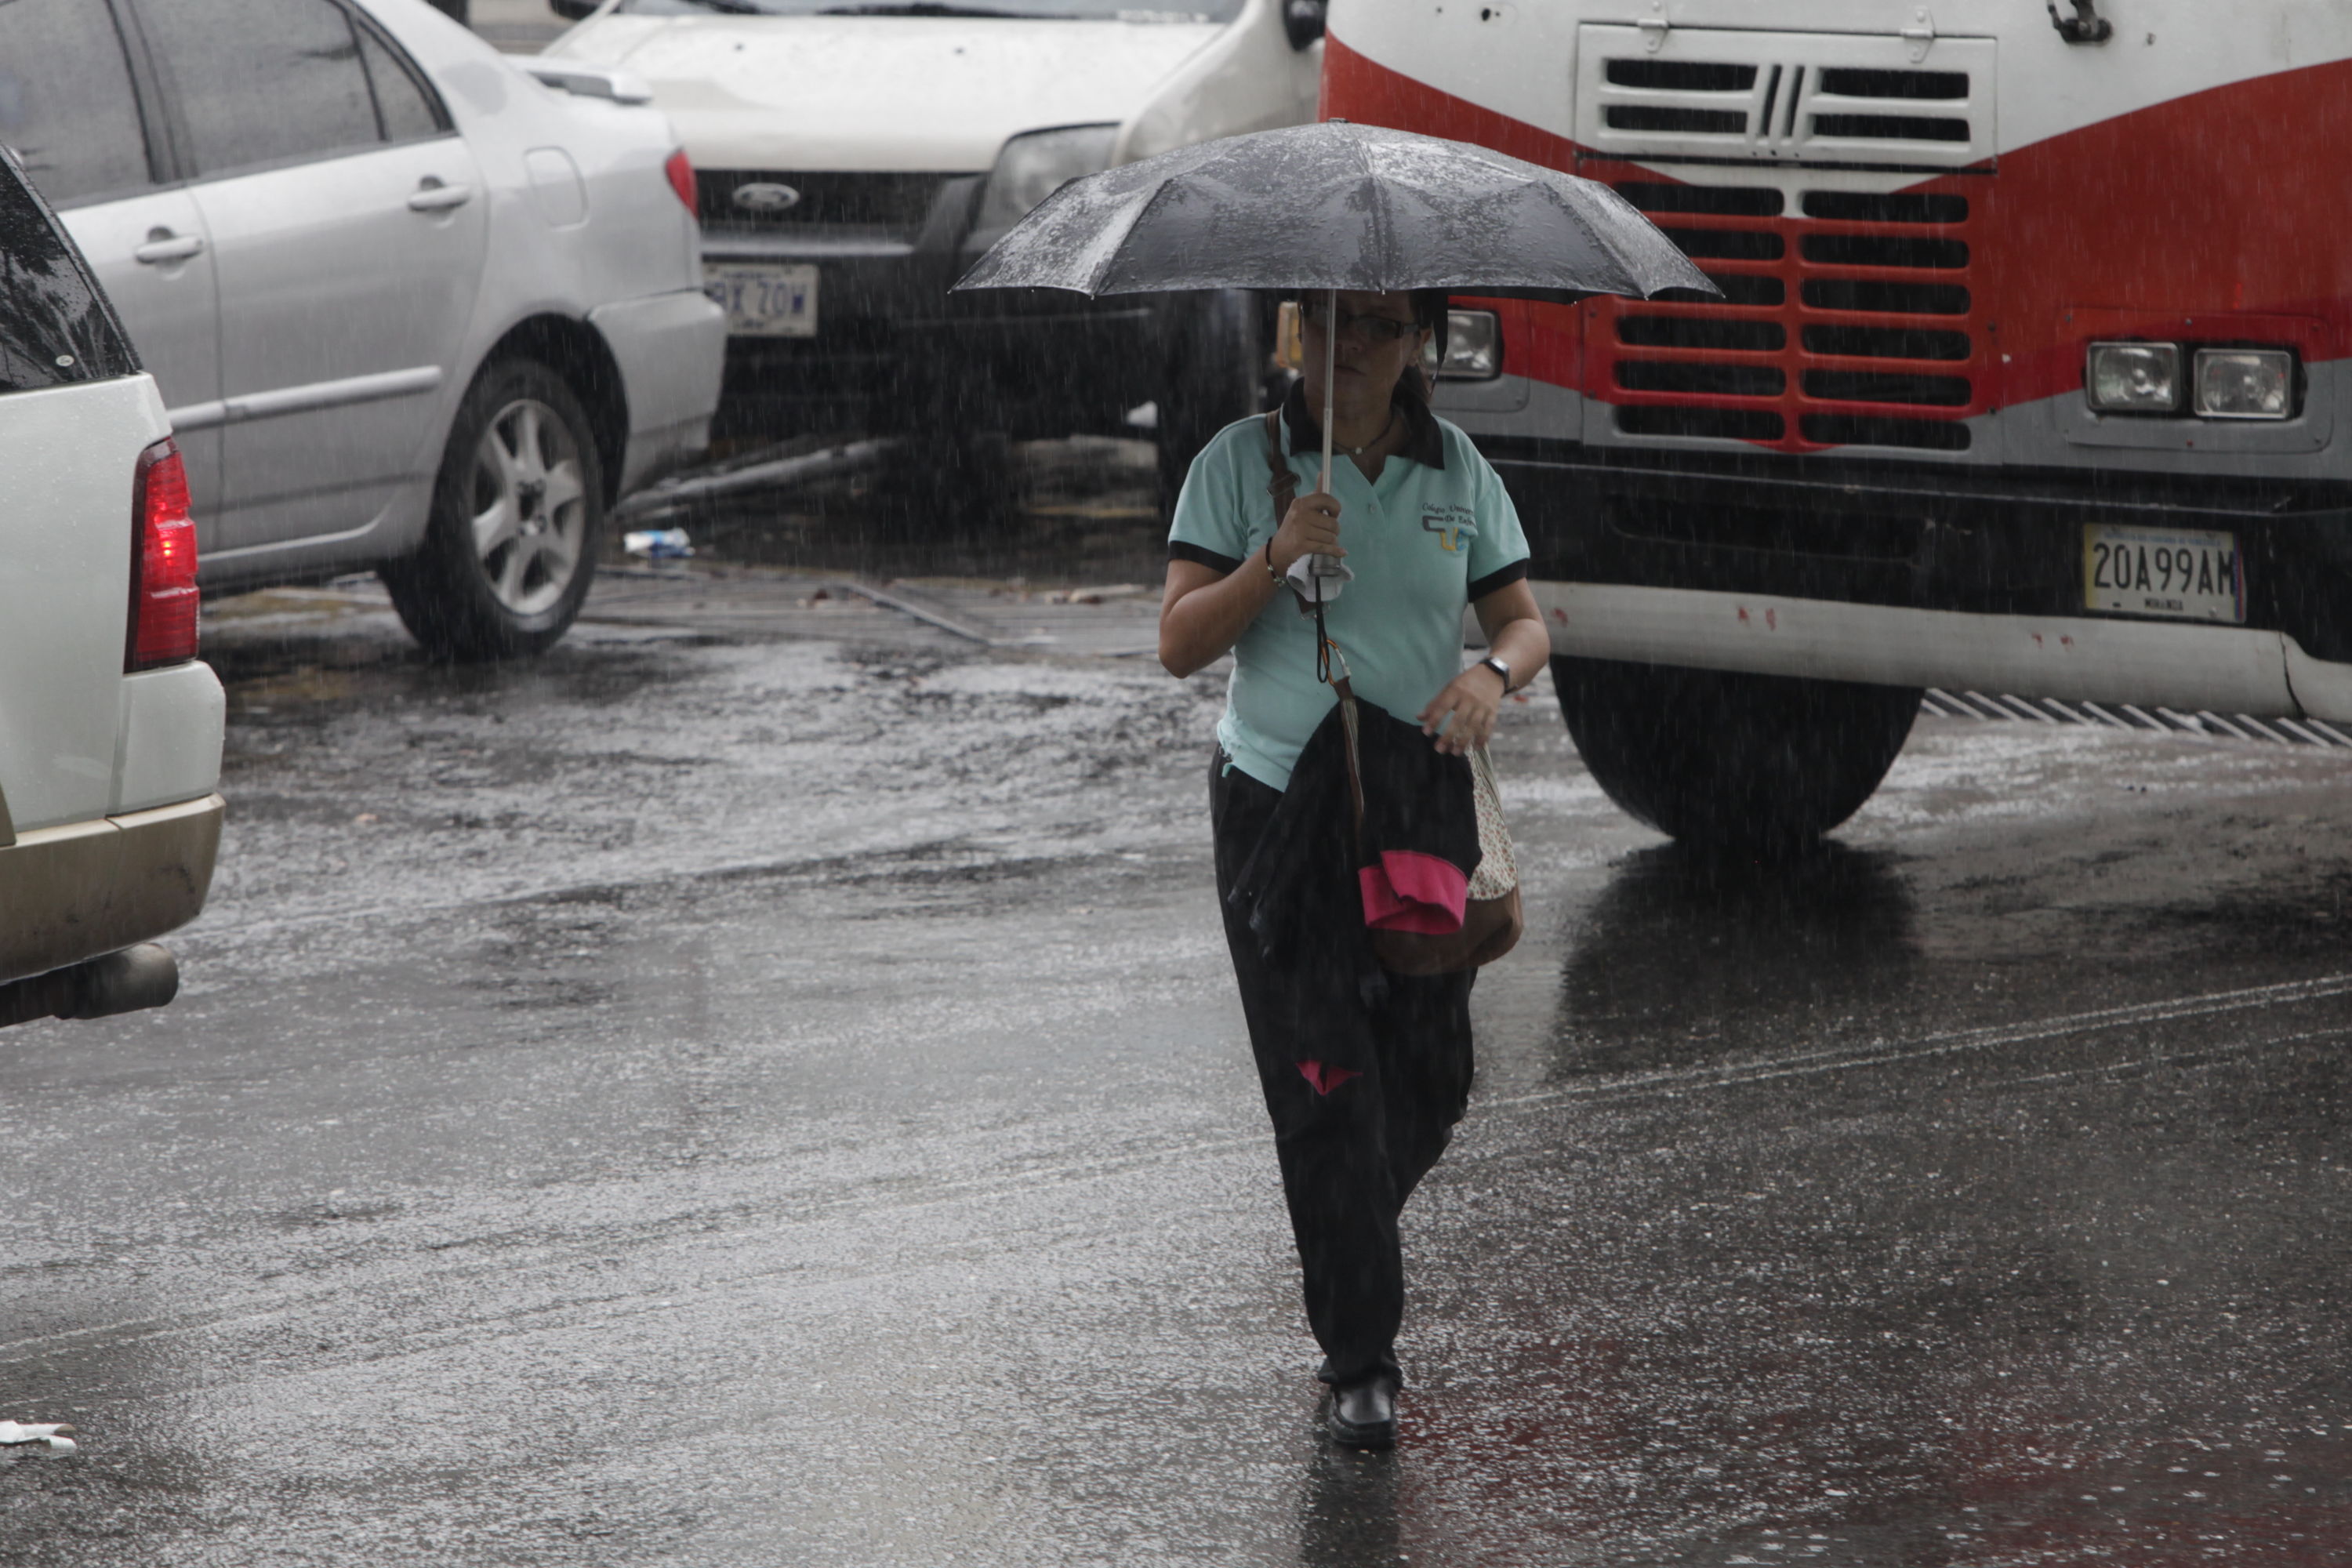 Caracas bajo la lluvia #14Dic